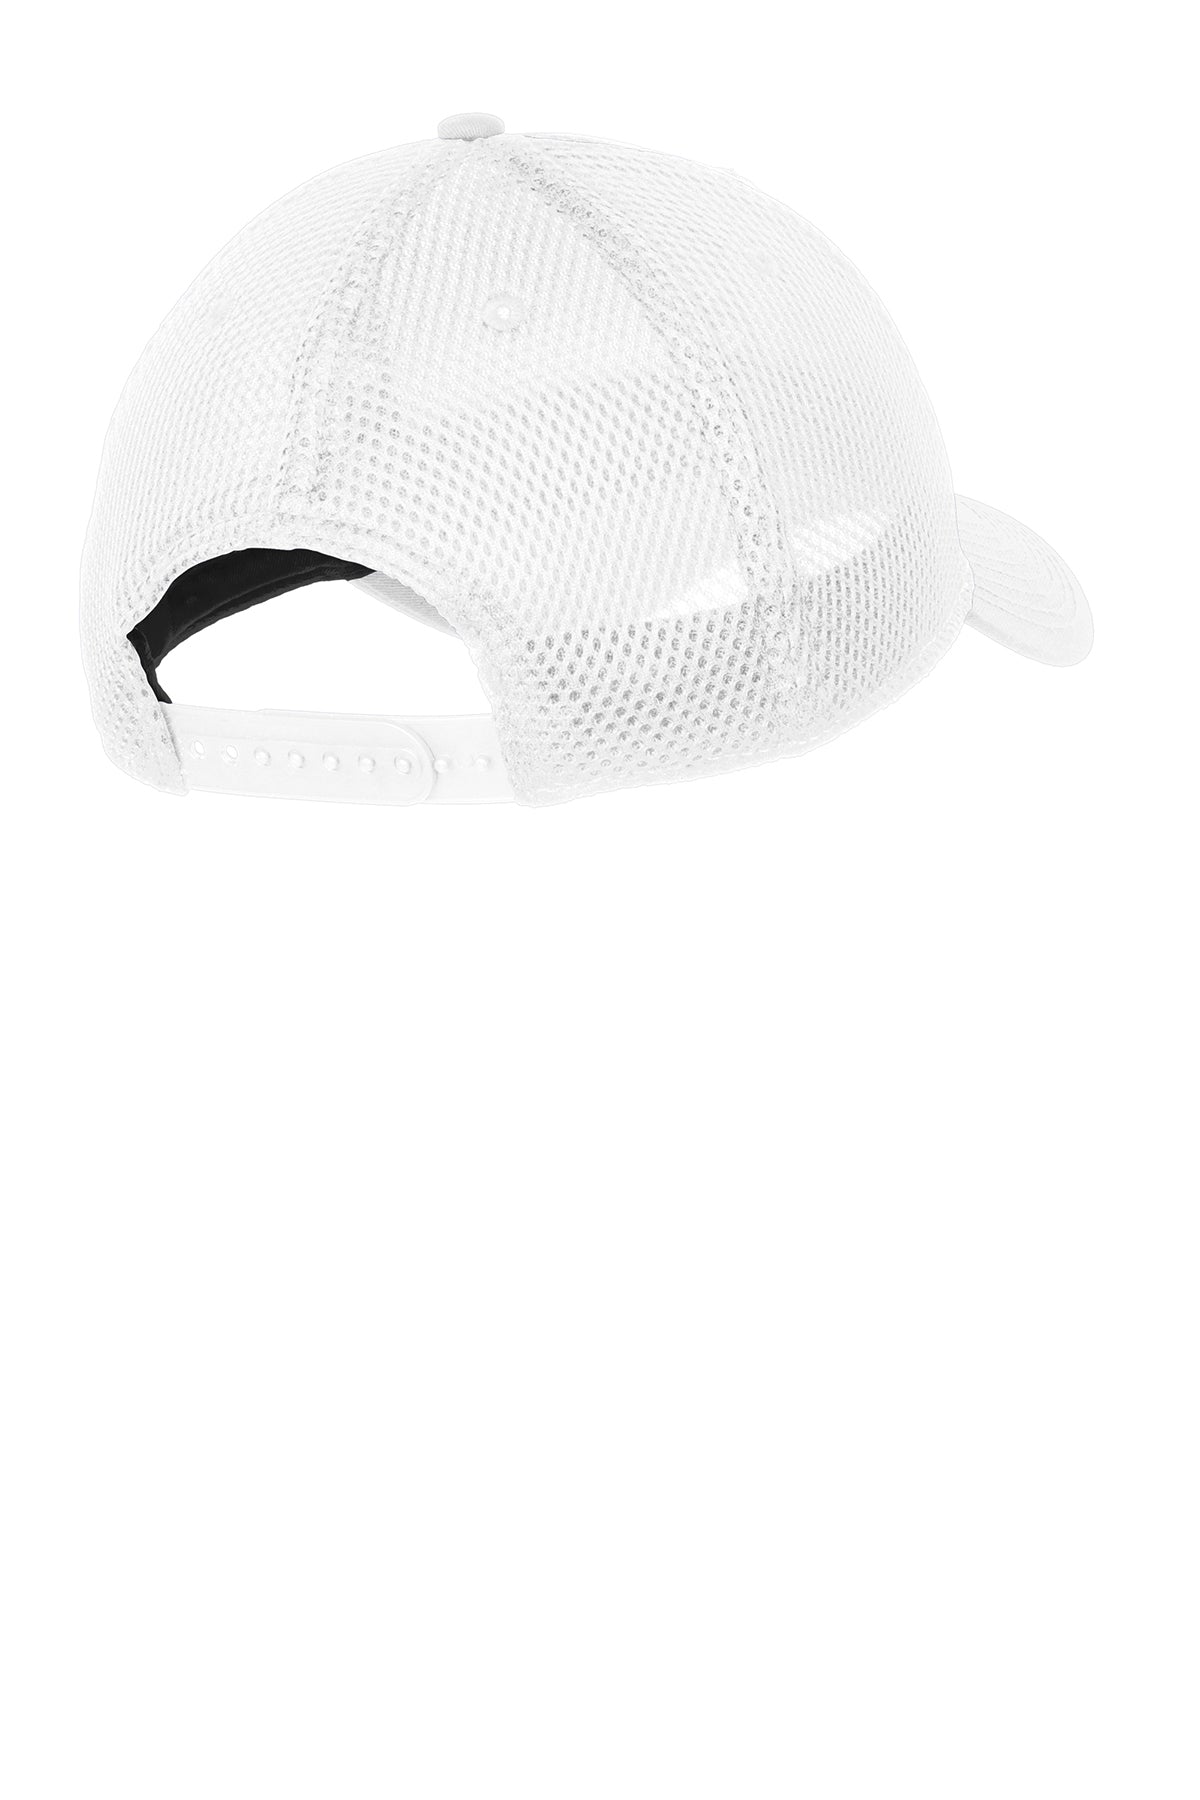 New Era Snapback Contrast Front Mesh Customized Caps, White/White